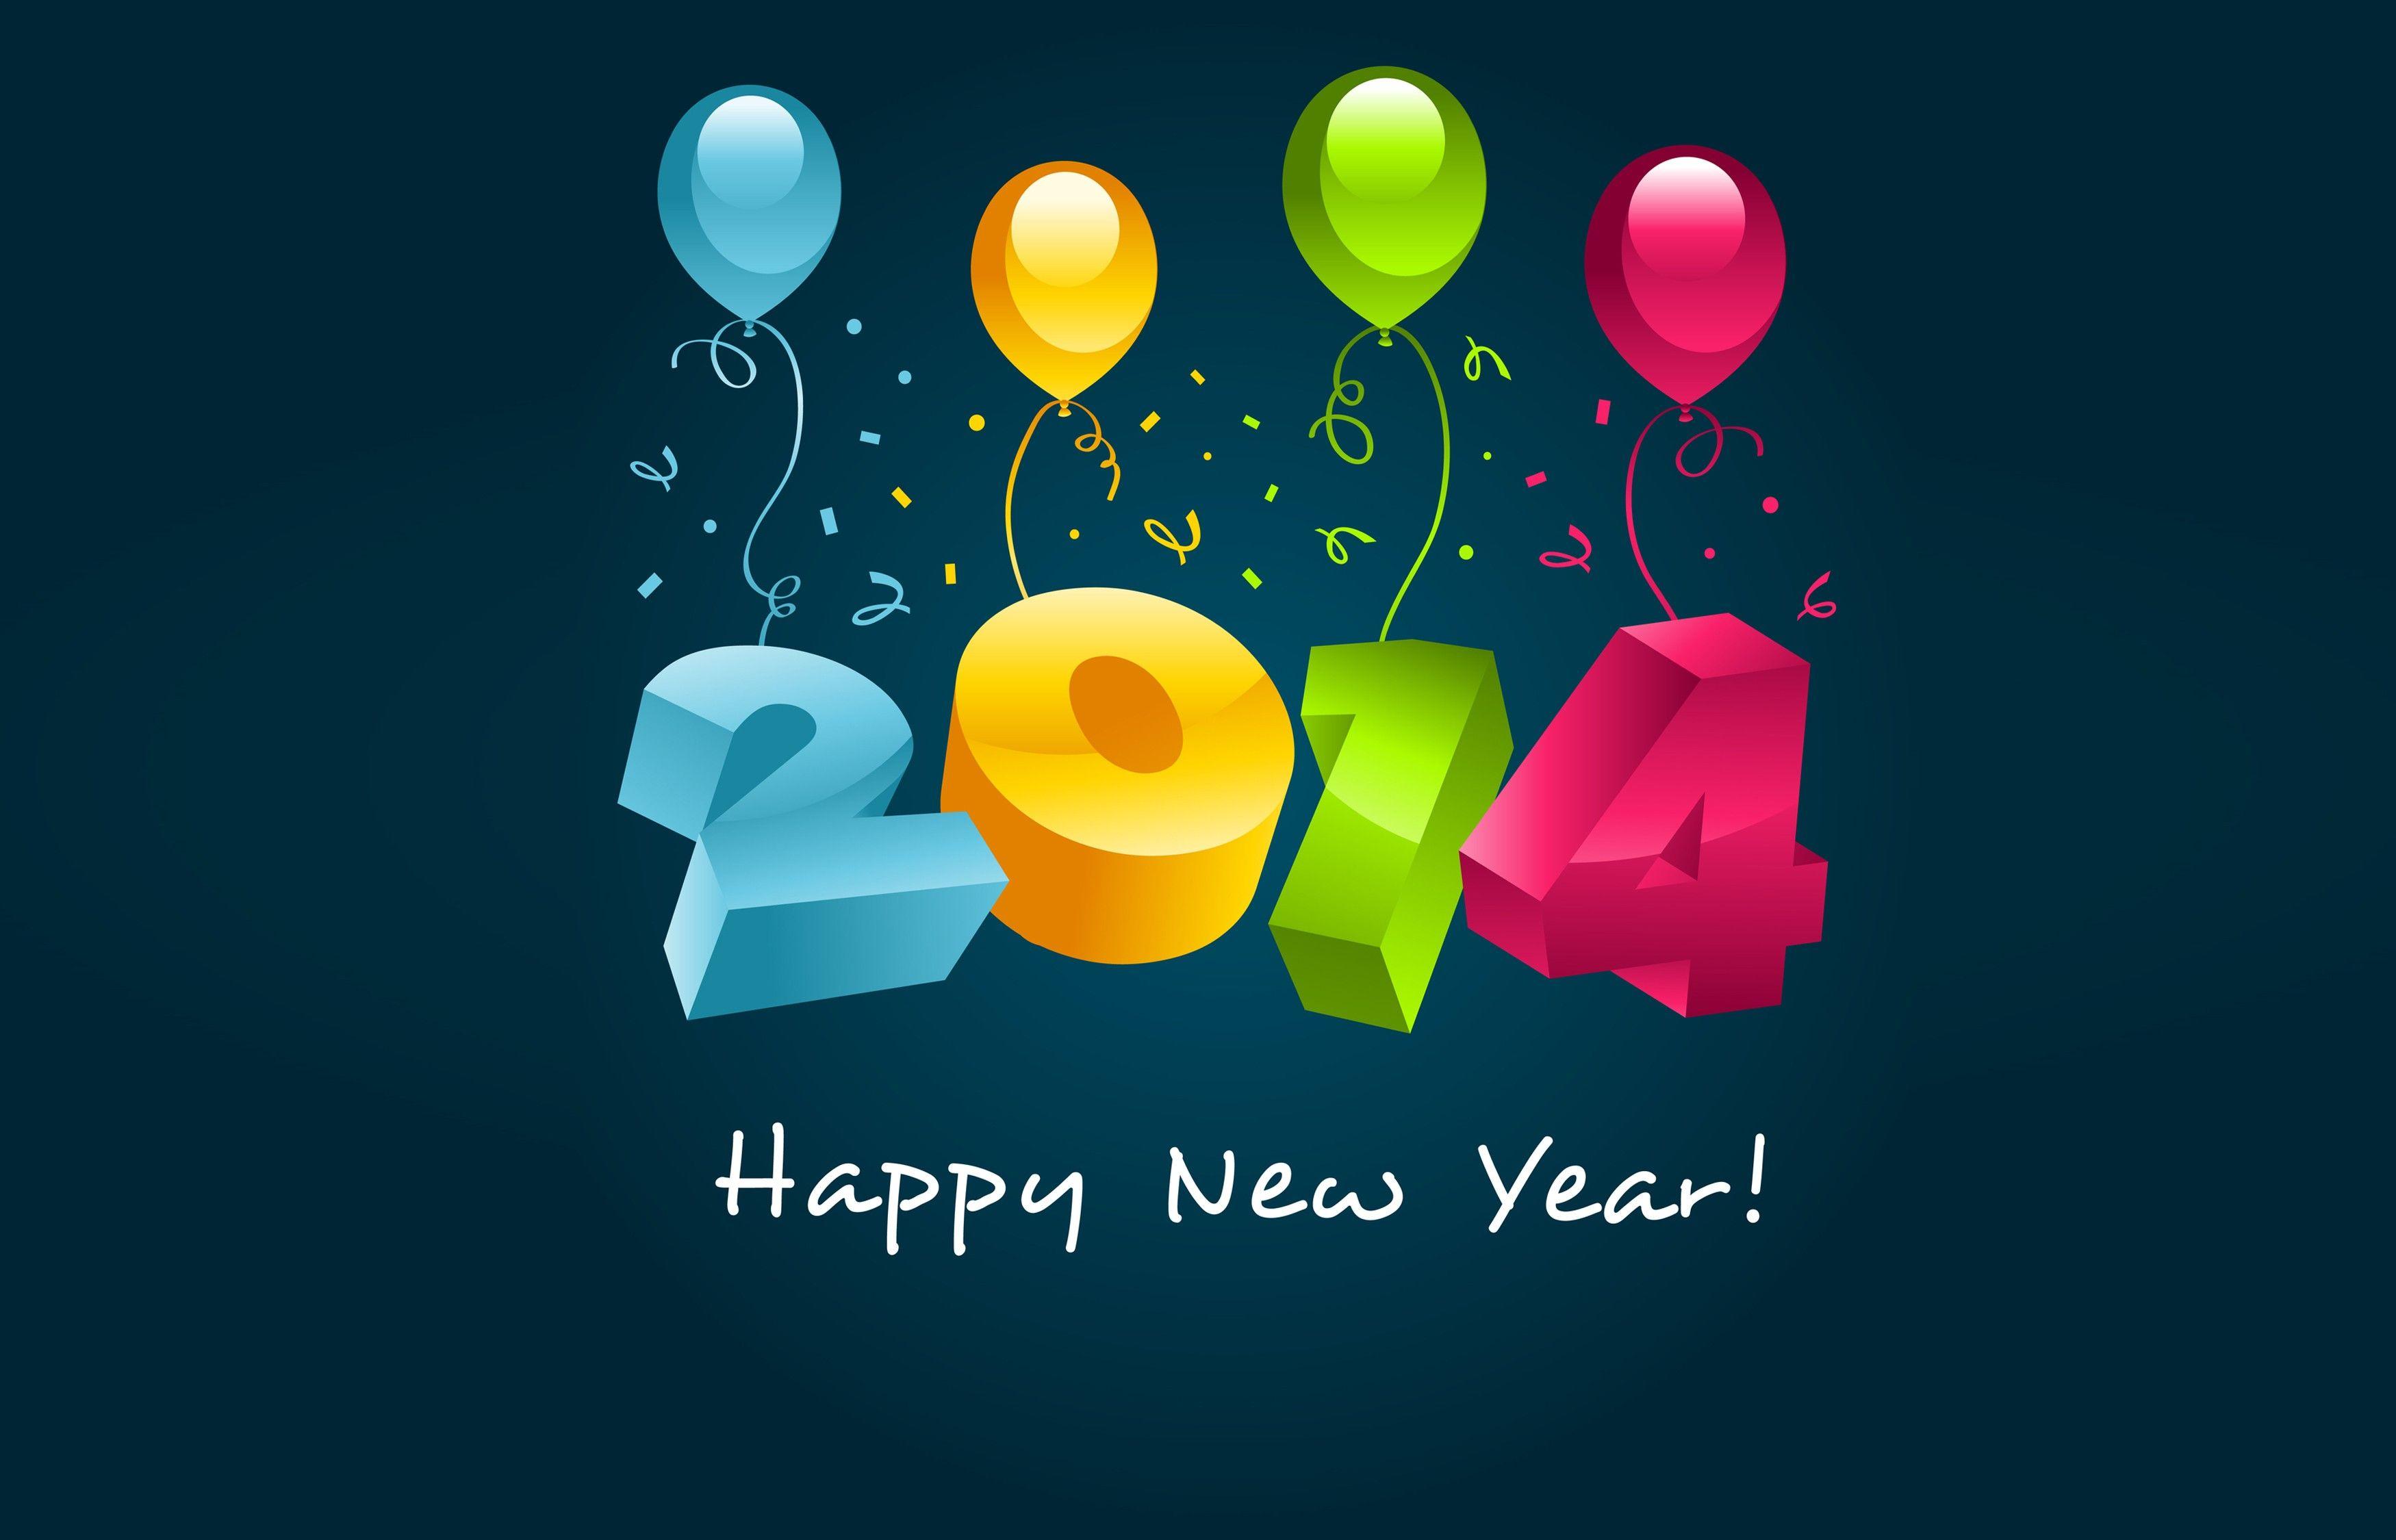 Free Happy New Year Wallpaper 2014 Designs